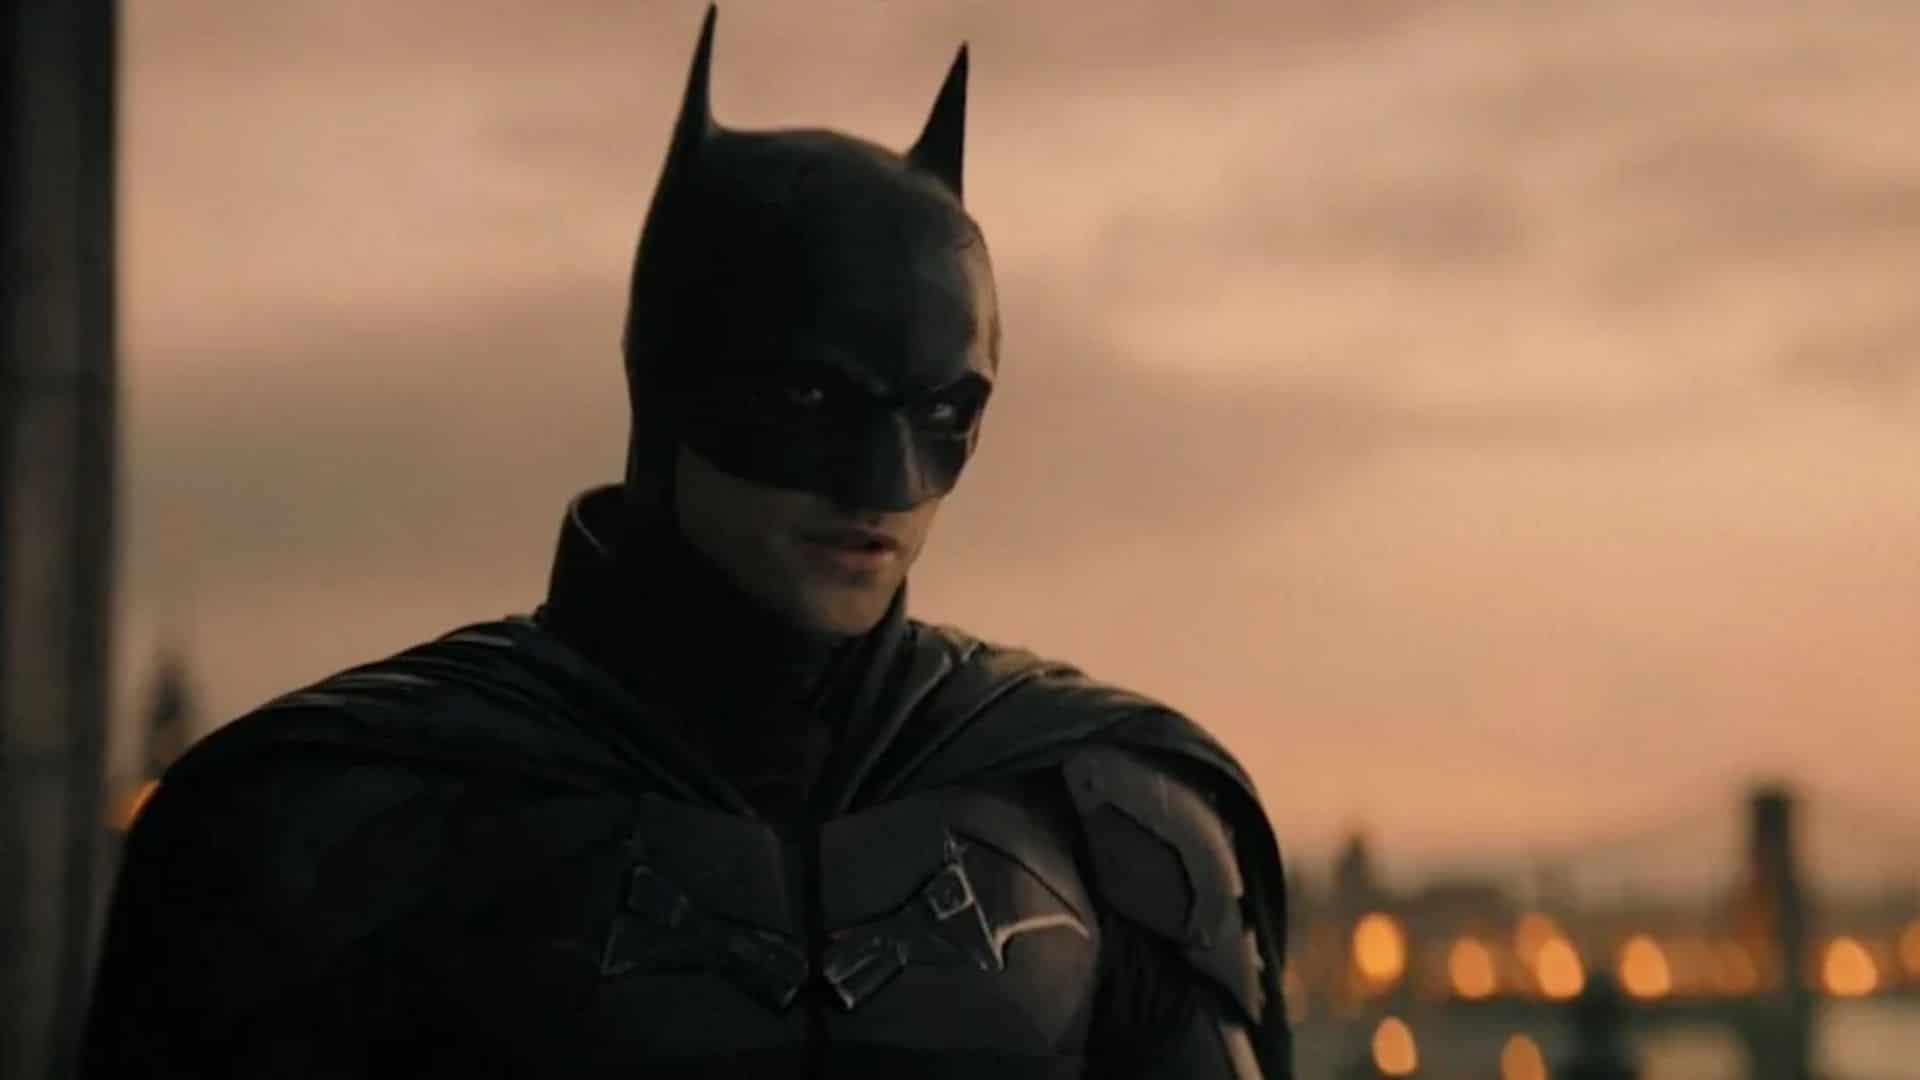 Imagme do filme The Batman